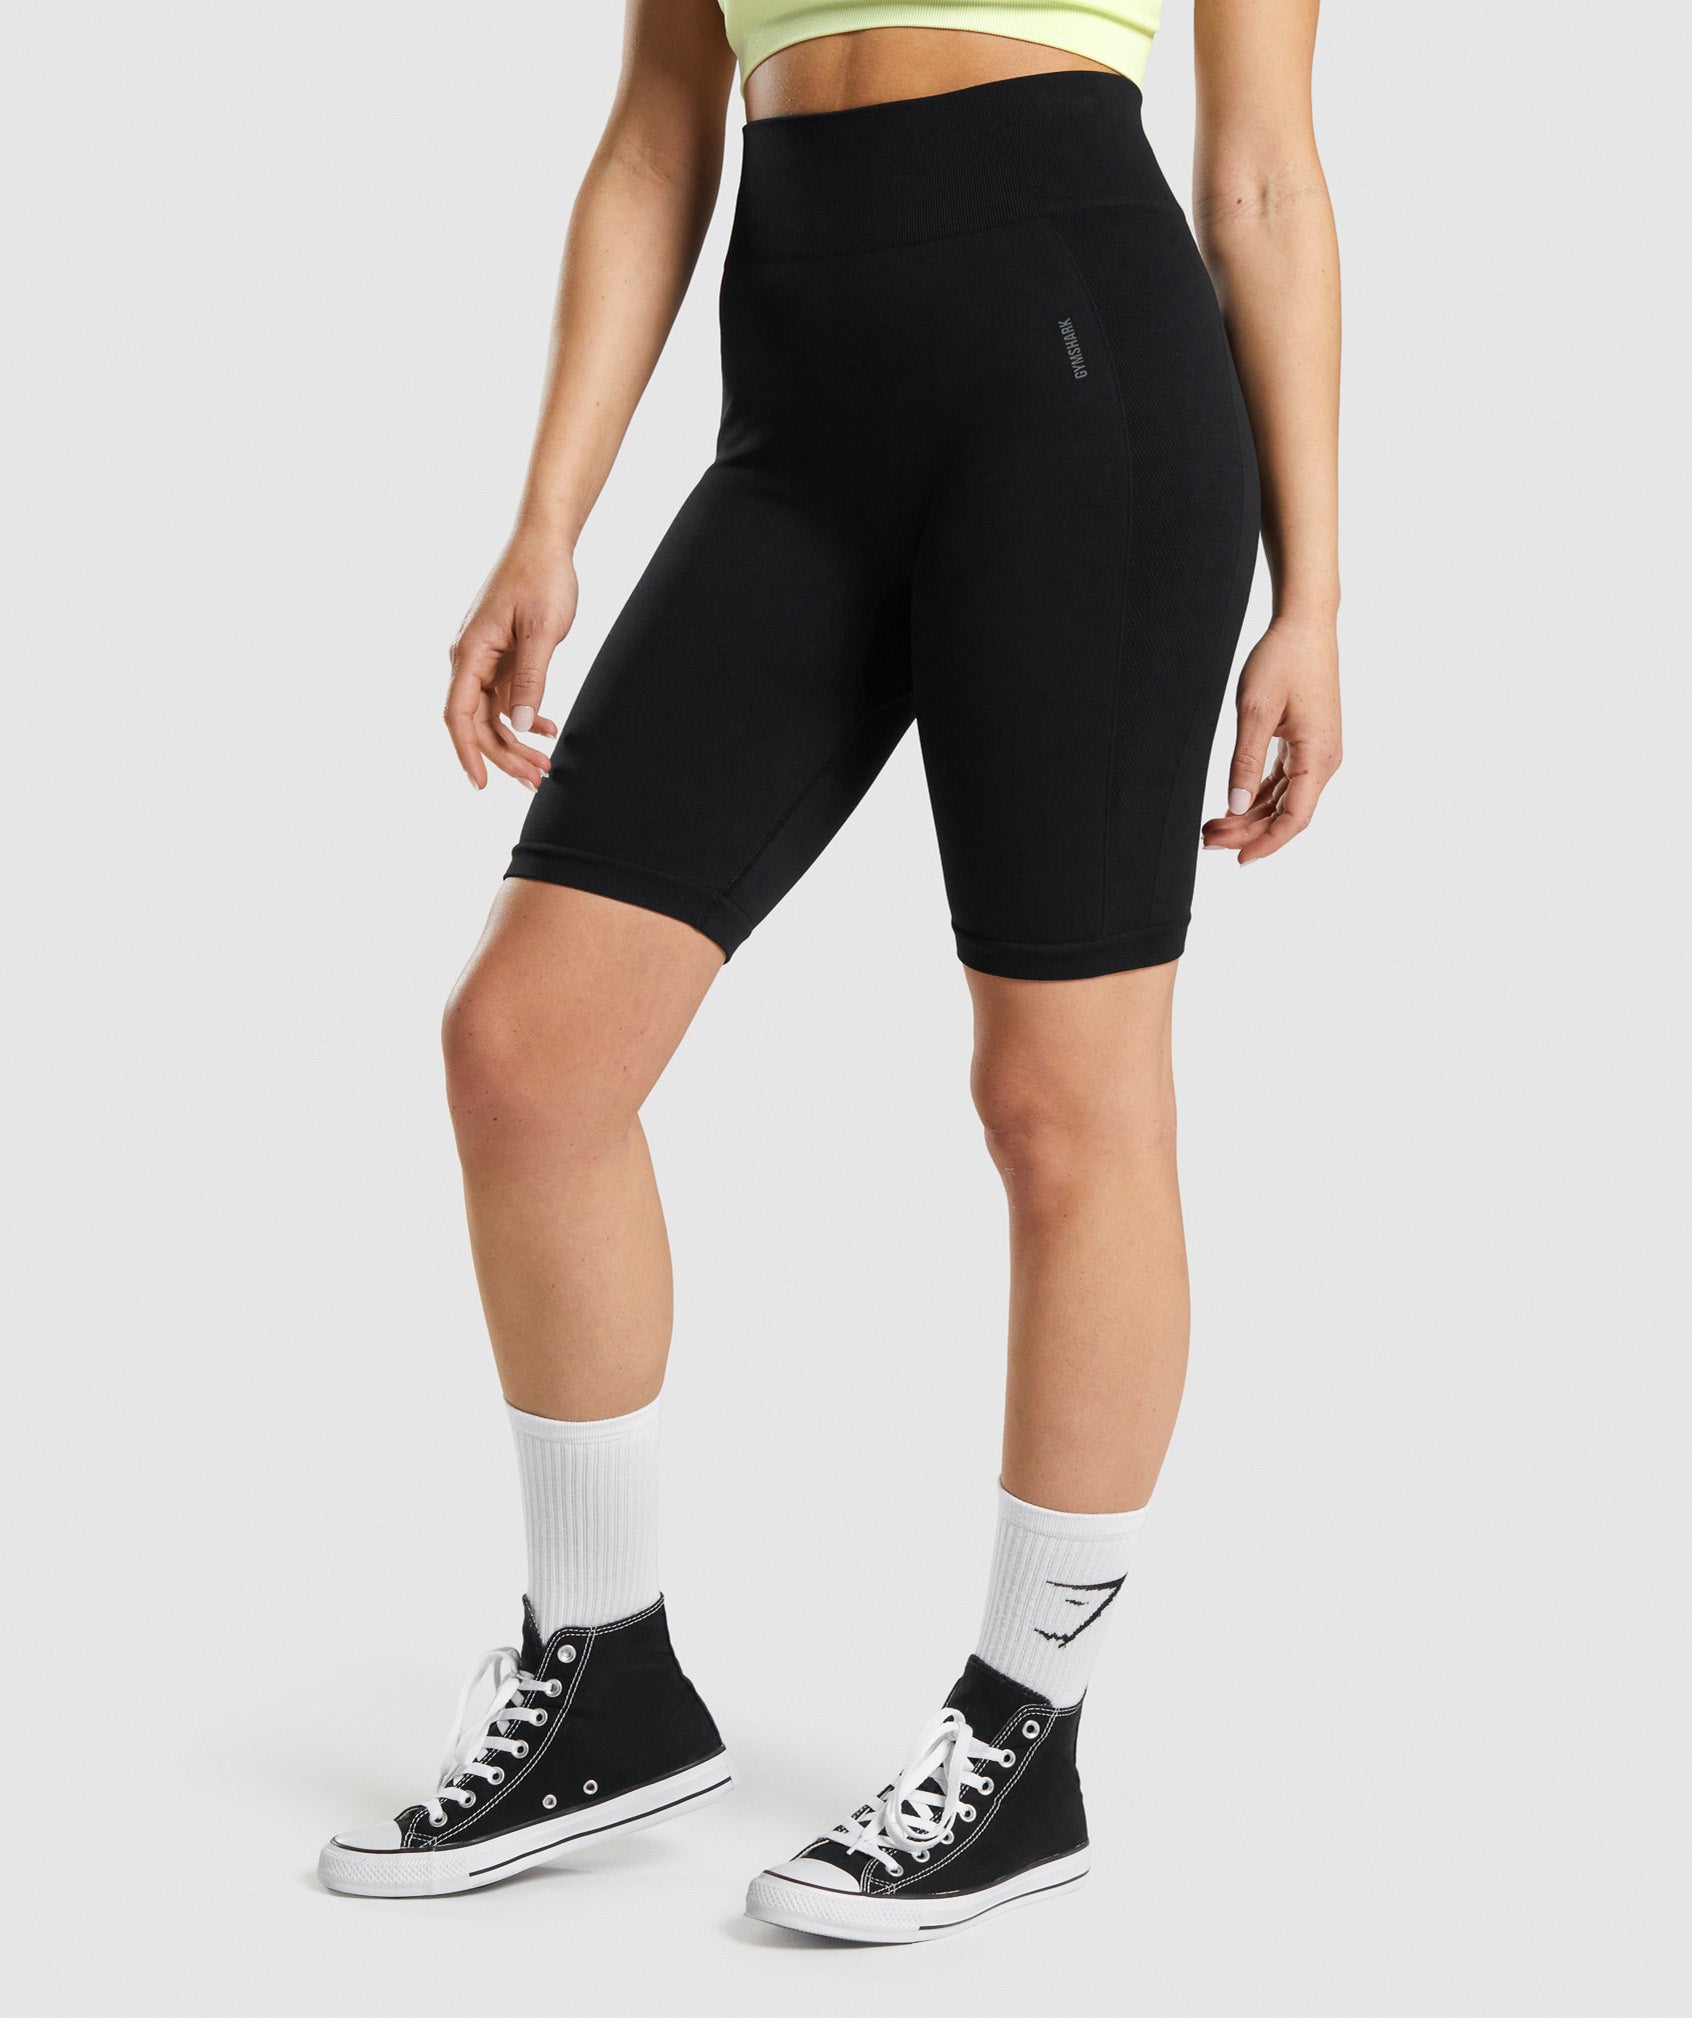 Gymshark Shorts Women XS Black Solid Drawstring Pockets Stretch Lining  Sports